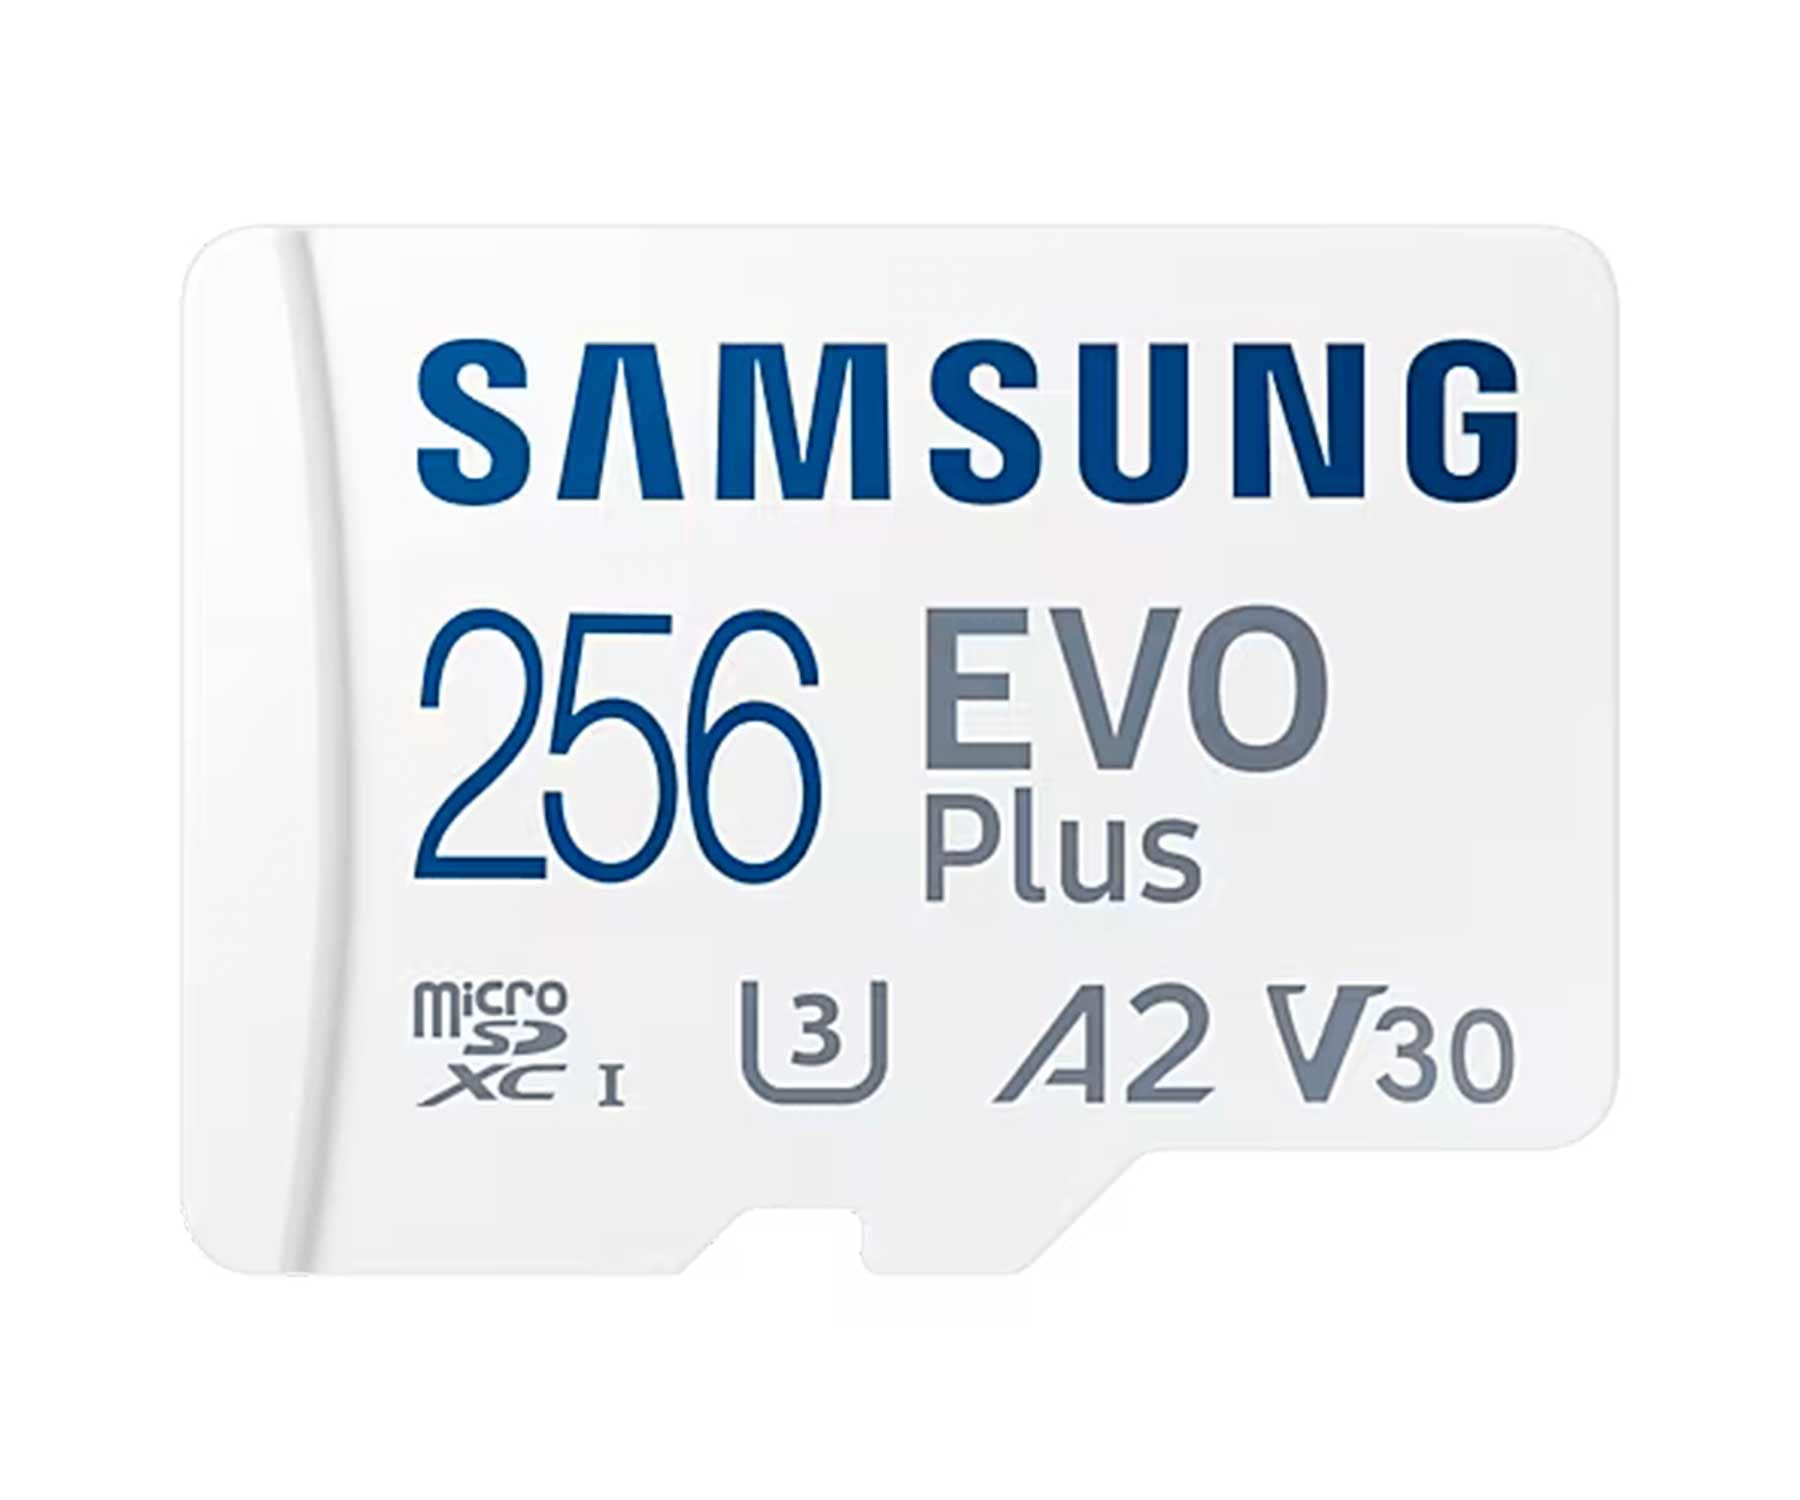 Samsung Evo Plus / Memoria microSD 256GB + Adaptador SD